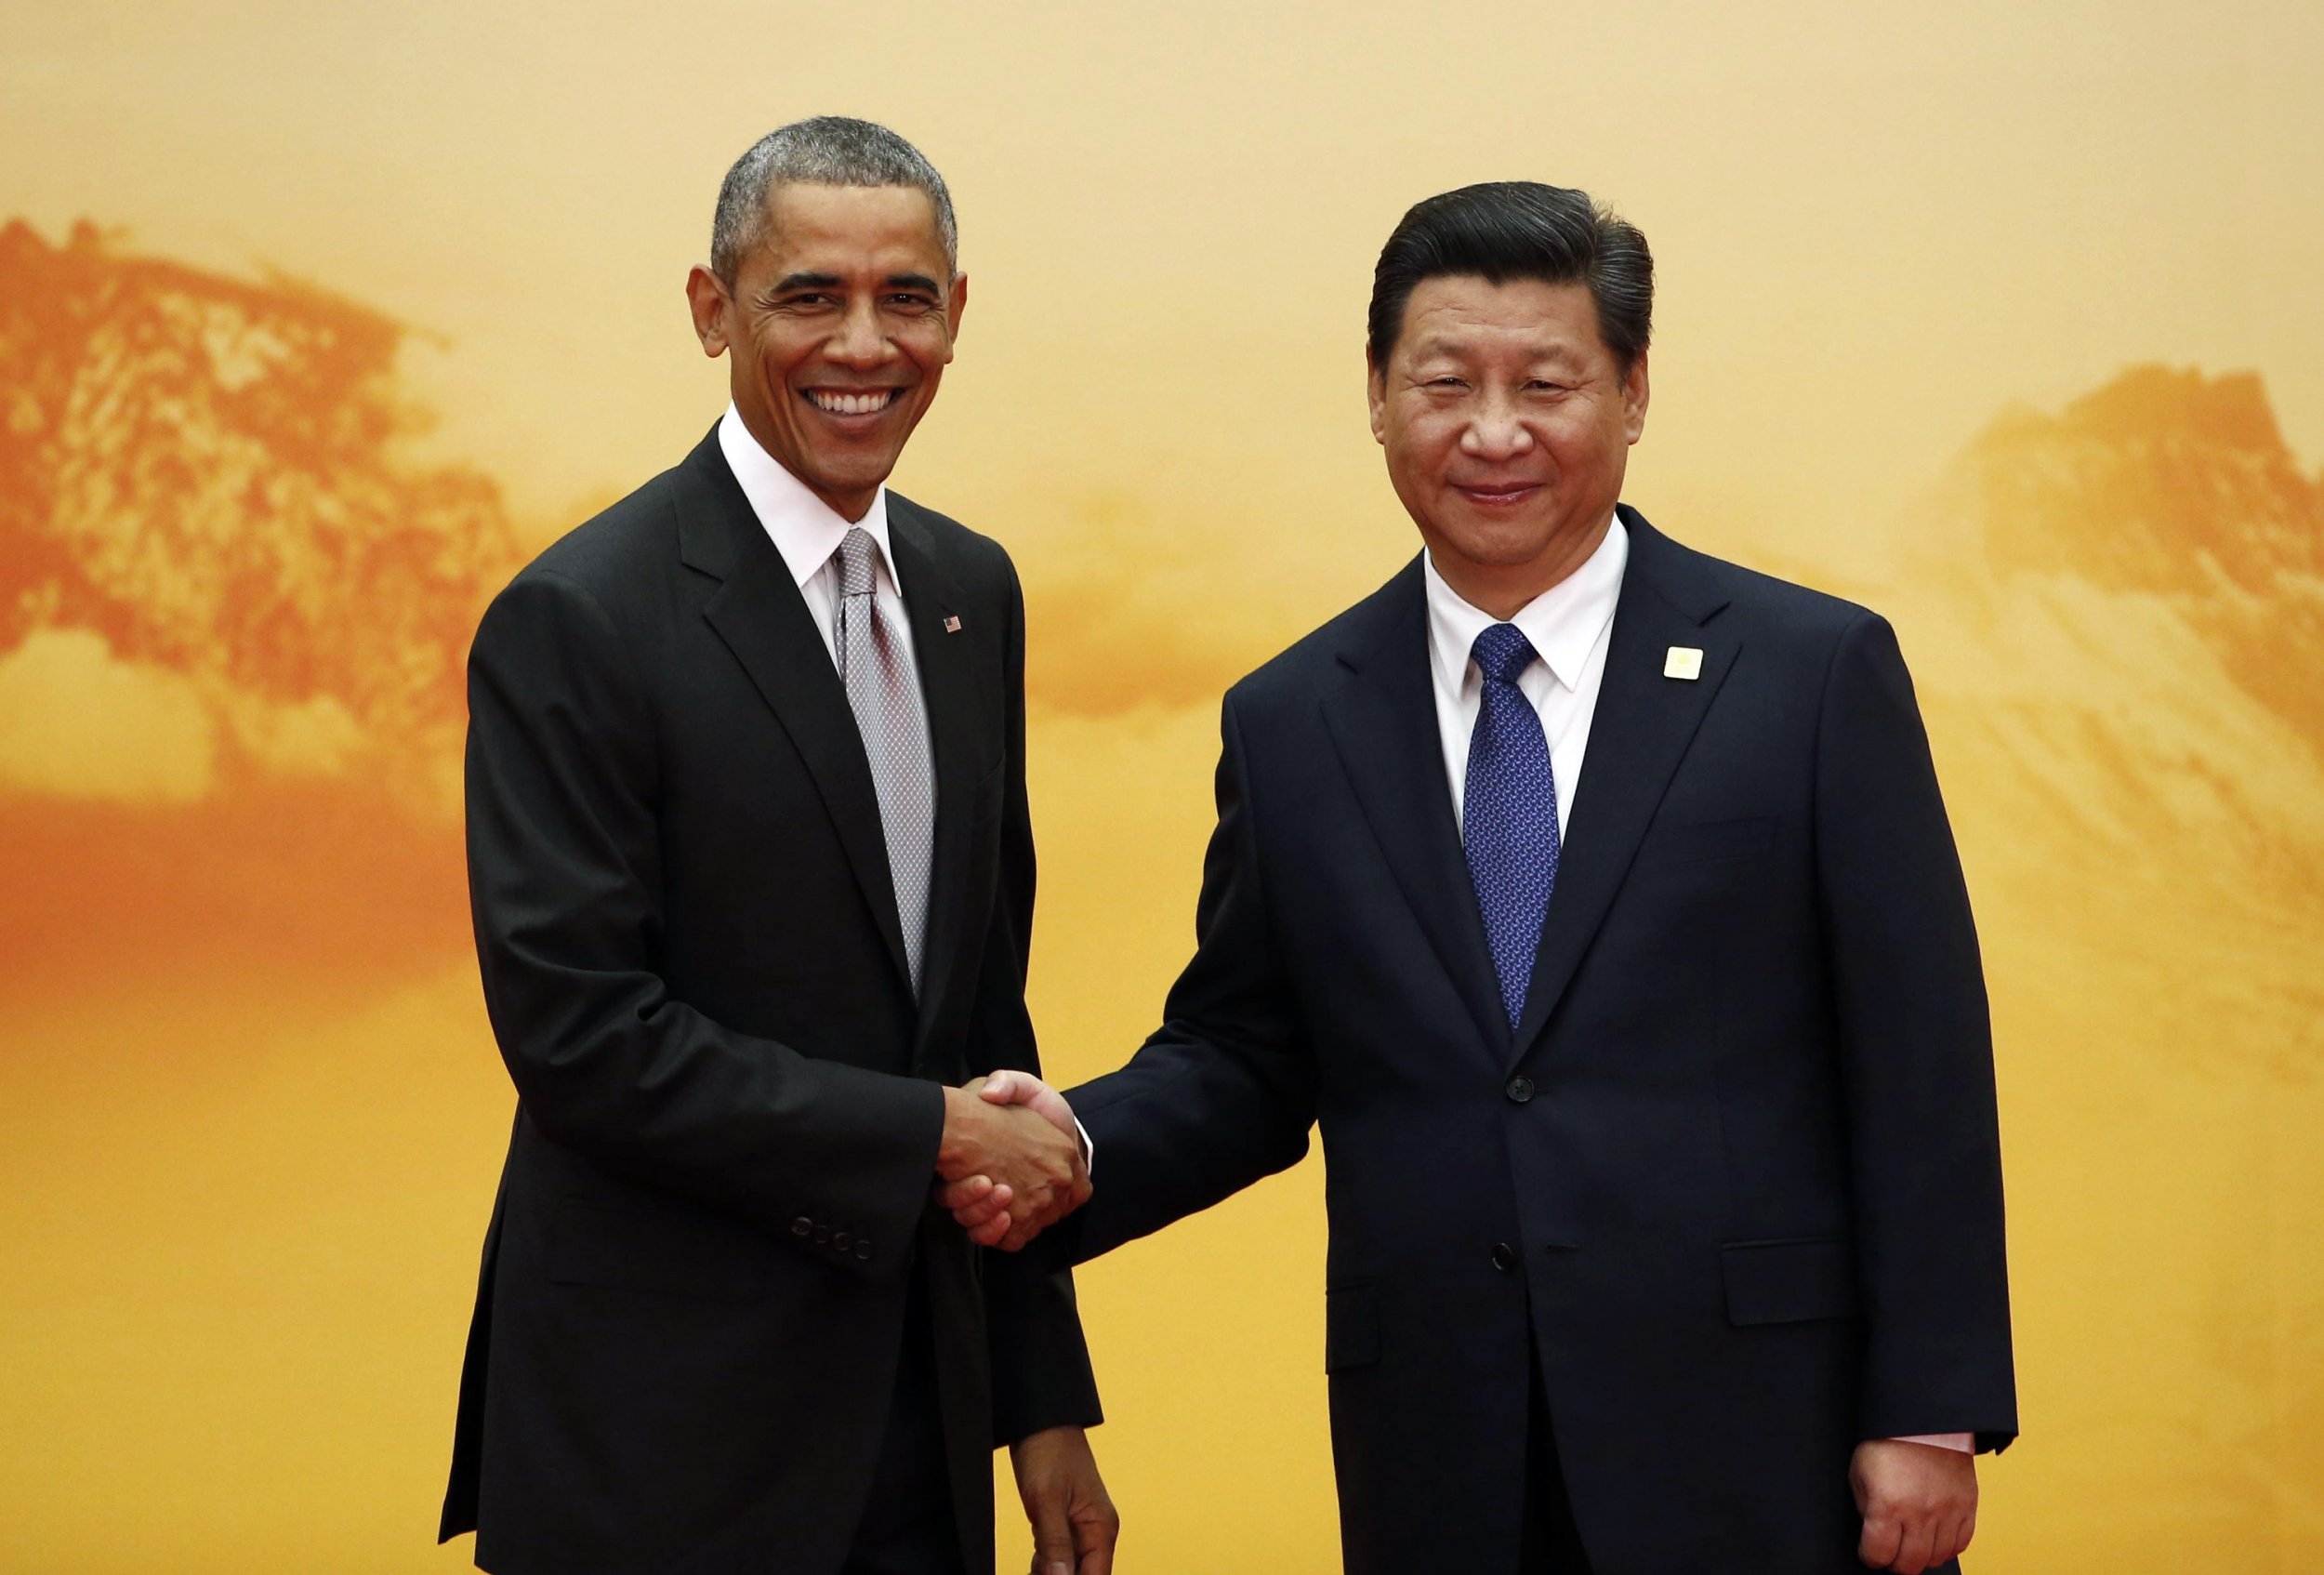 President Obama and President Xi